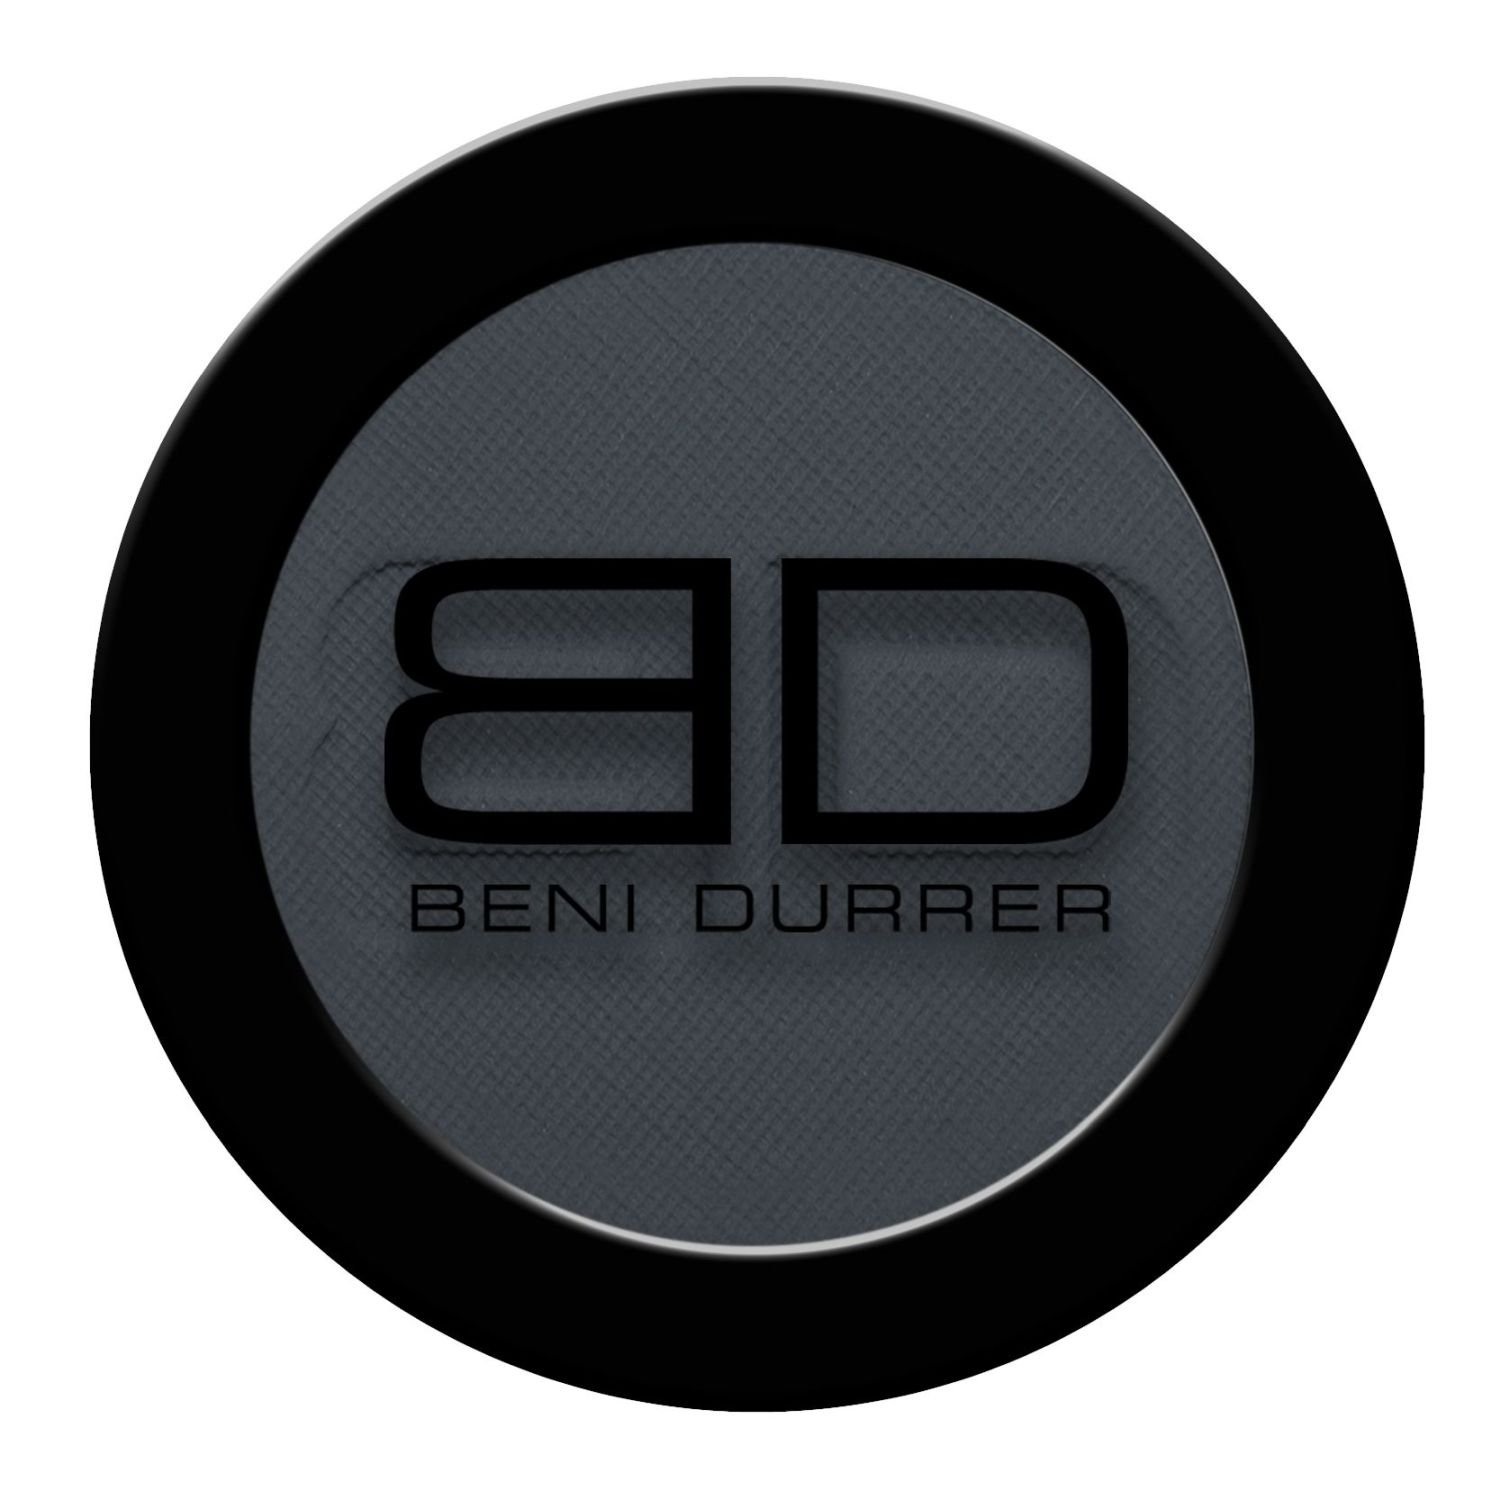 Beni Durrer 040530 - Puderpigmente Egoist, matt - kalt, 2,5 g, in eleganter Klappdose